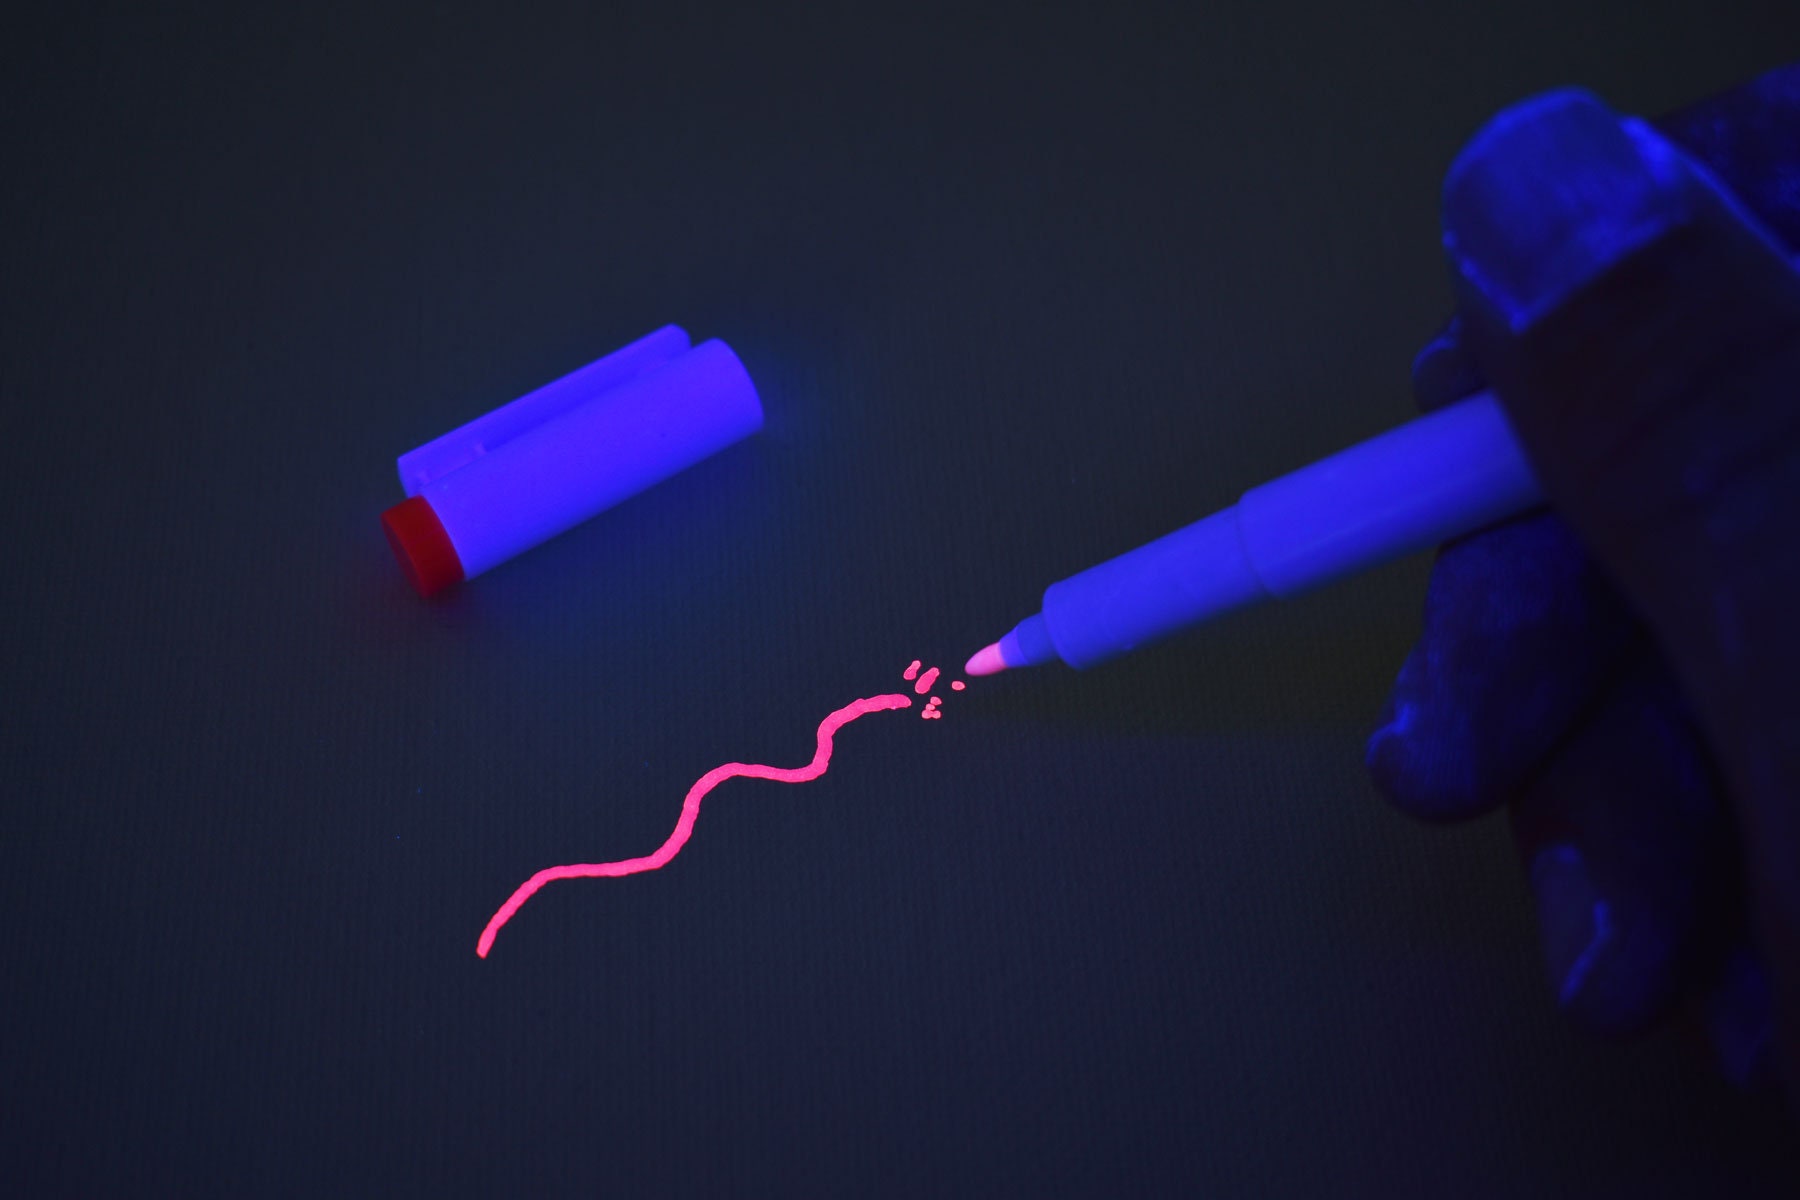 DirectGlow Invisible UV Blacklight Reactive Pen Ink Marker (Blue, 1 Marker)